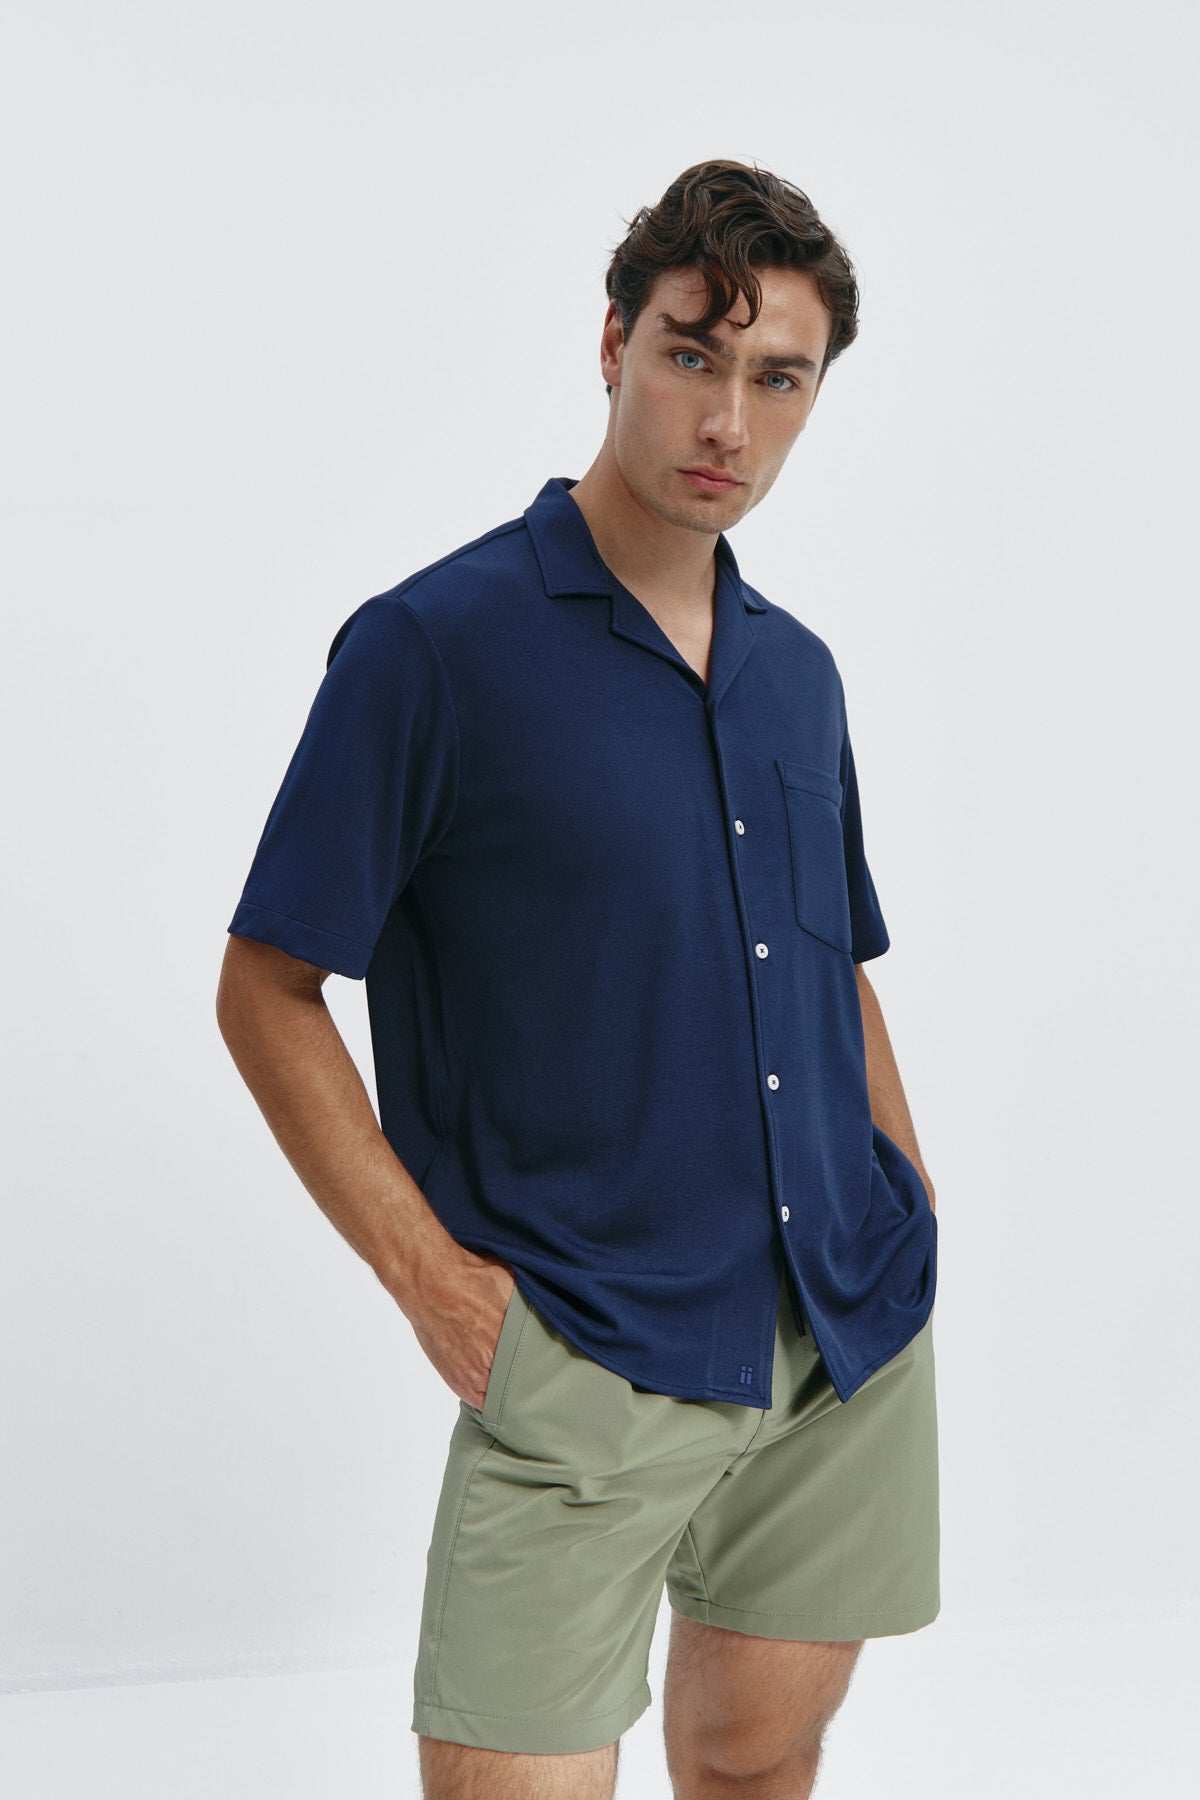 Camisa manga corta azul zafiro de Sepiia, fresca y elegante, perfecta para el verano. Foto frente